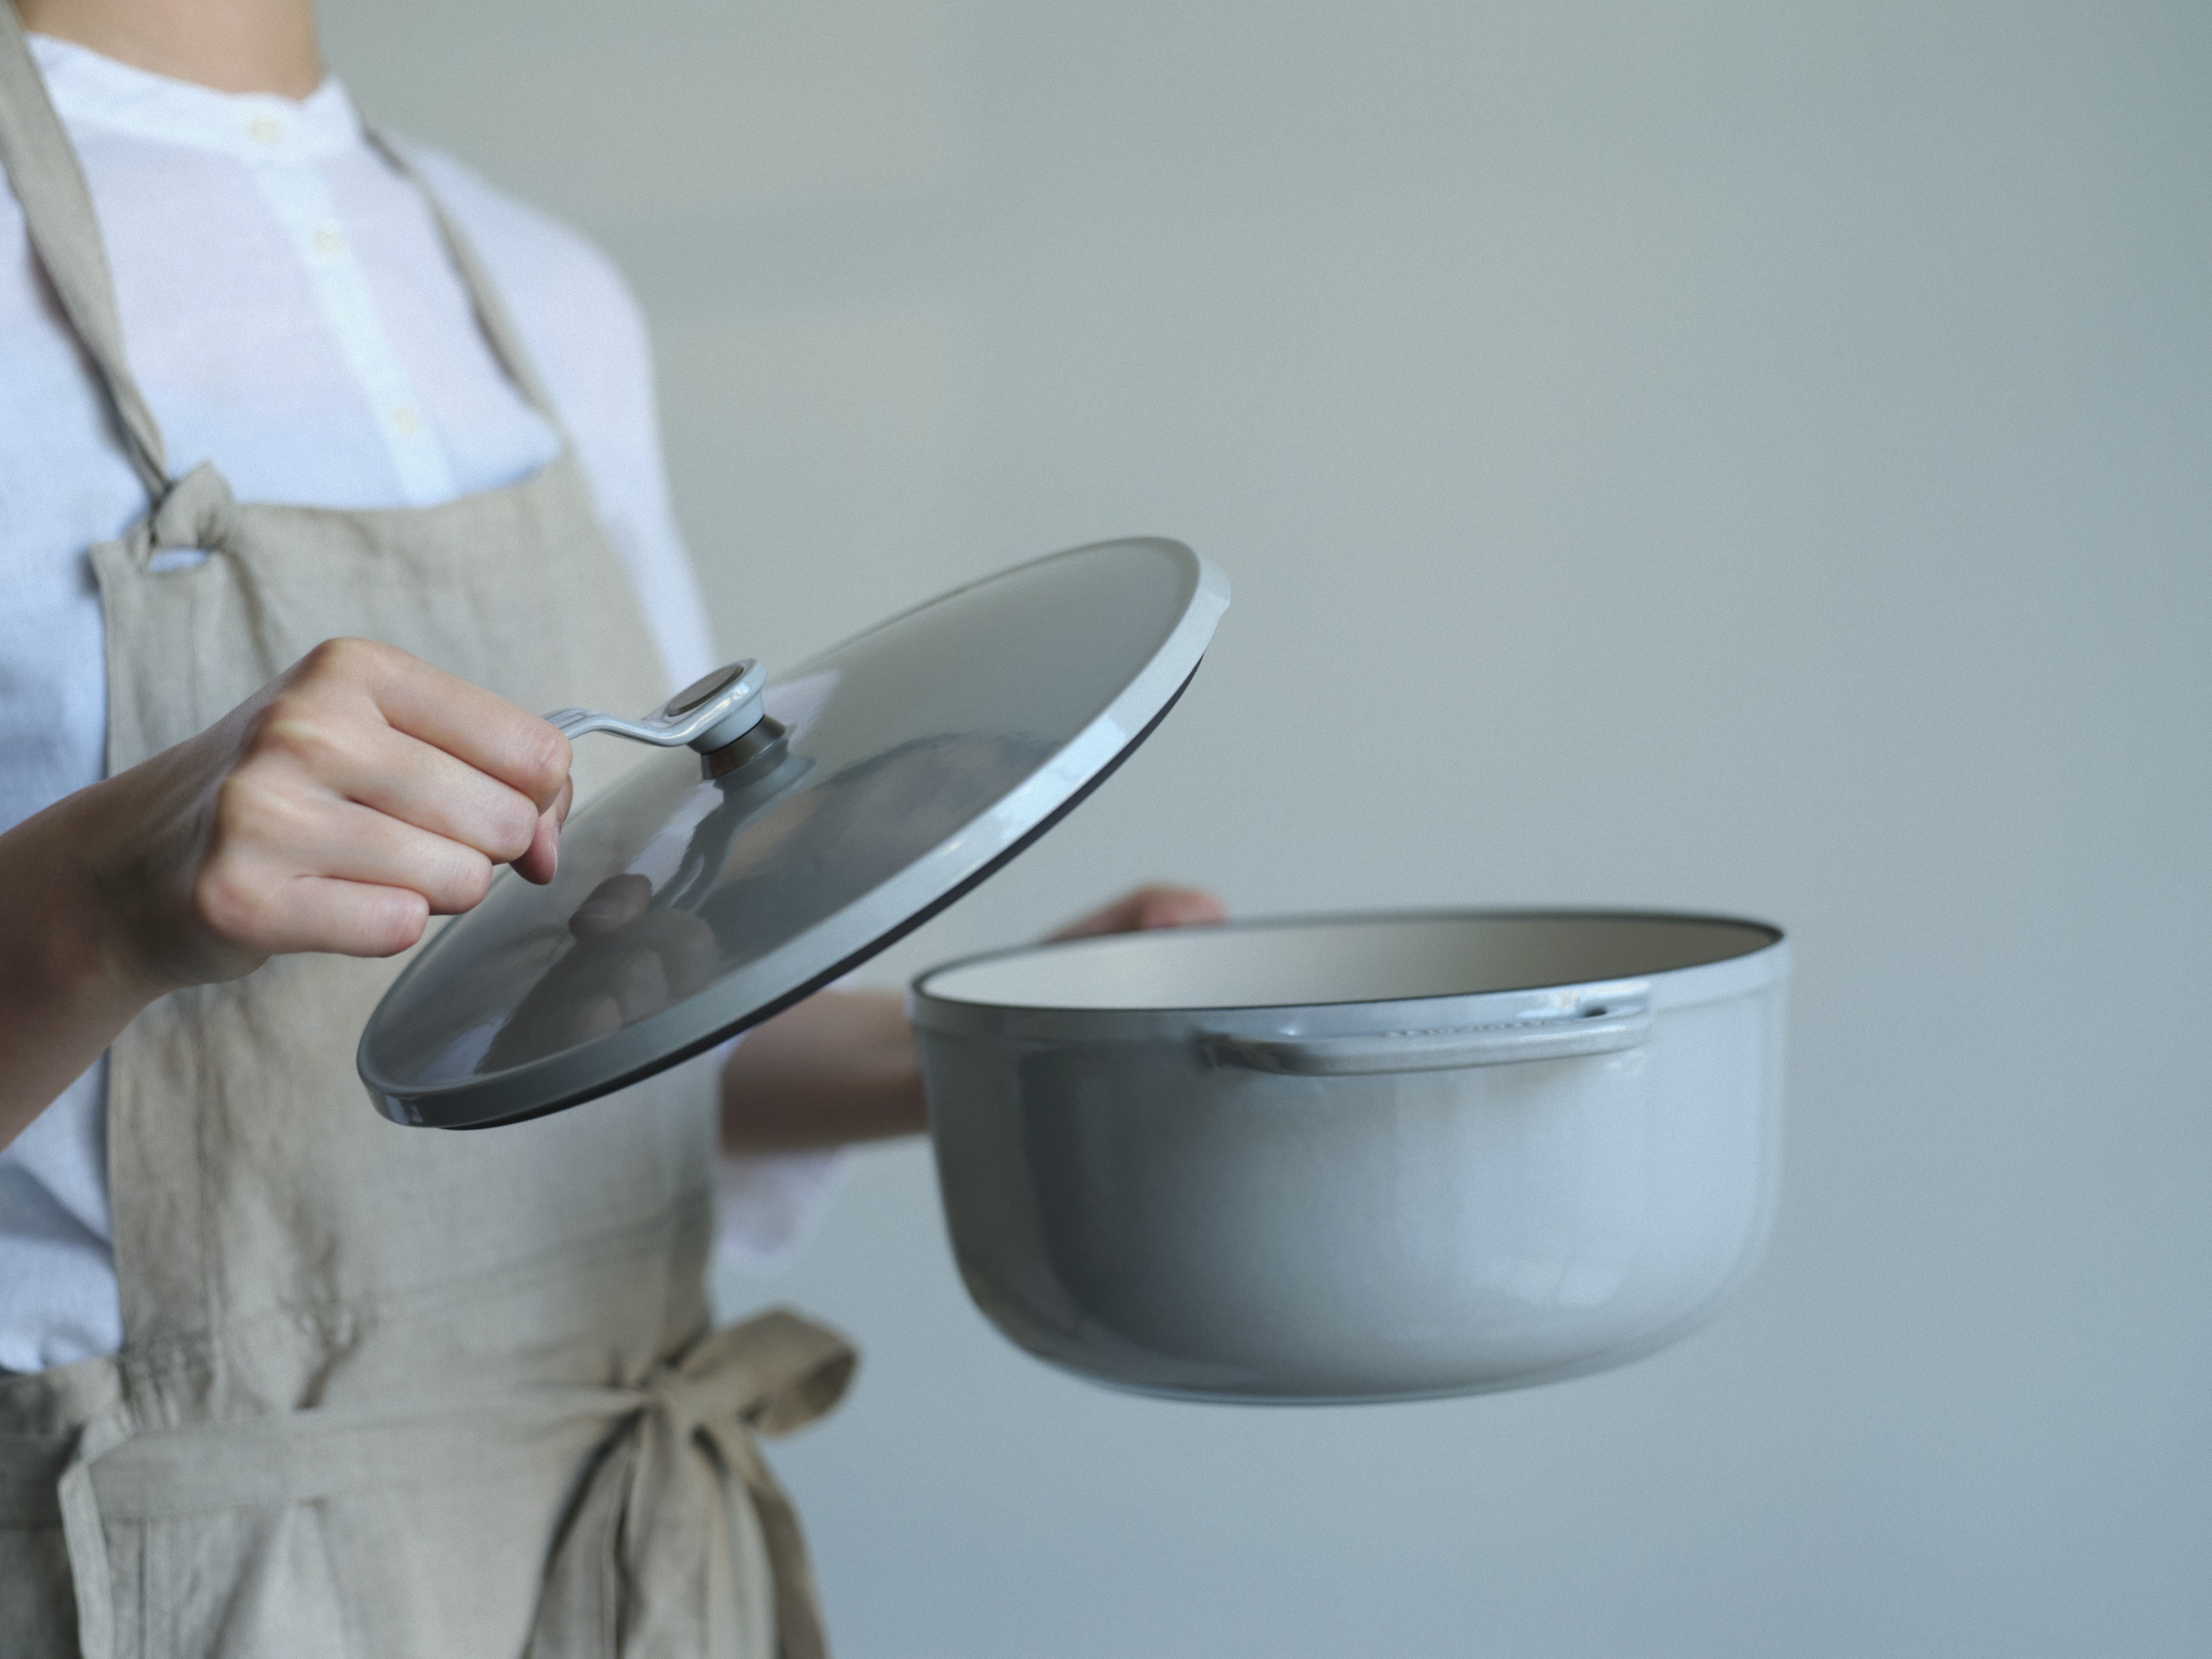 Vermicular Oven Pot 2 新一代琺瑯鑄鐵鍋——革命性輕巧設計，重新定義琺瑯鑄鐵鍋的烹飪藝術